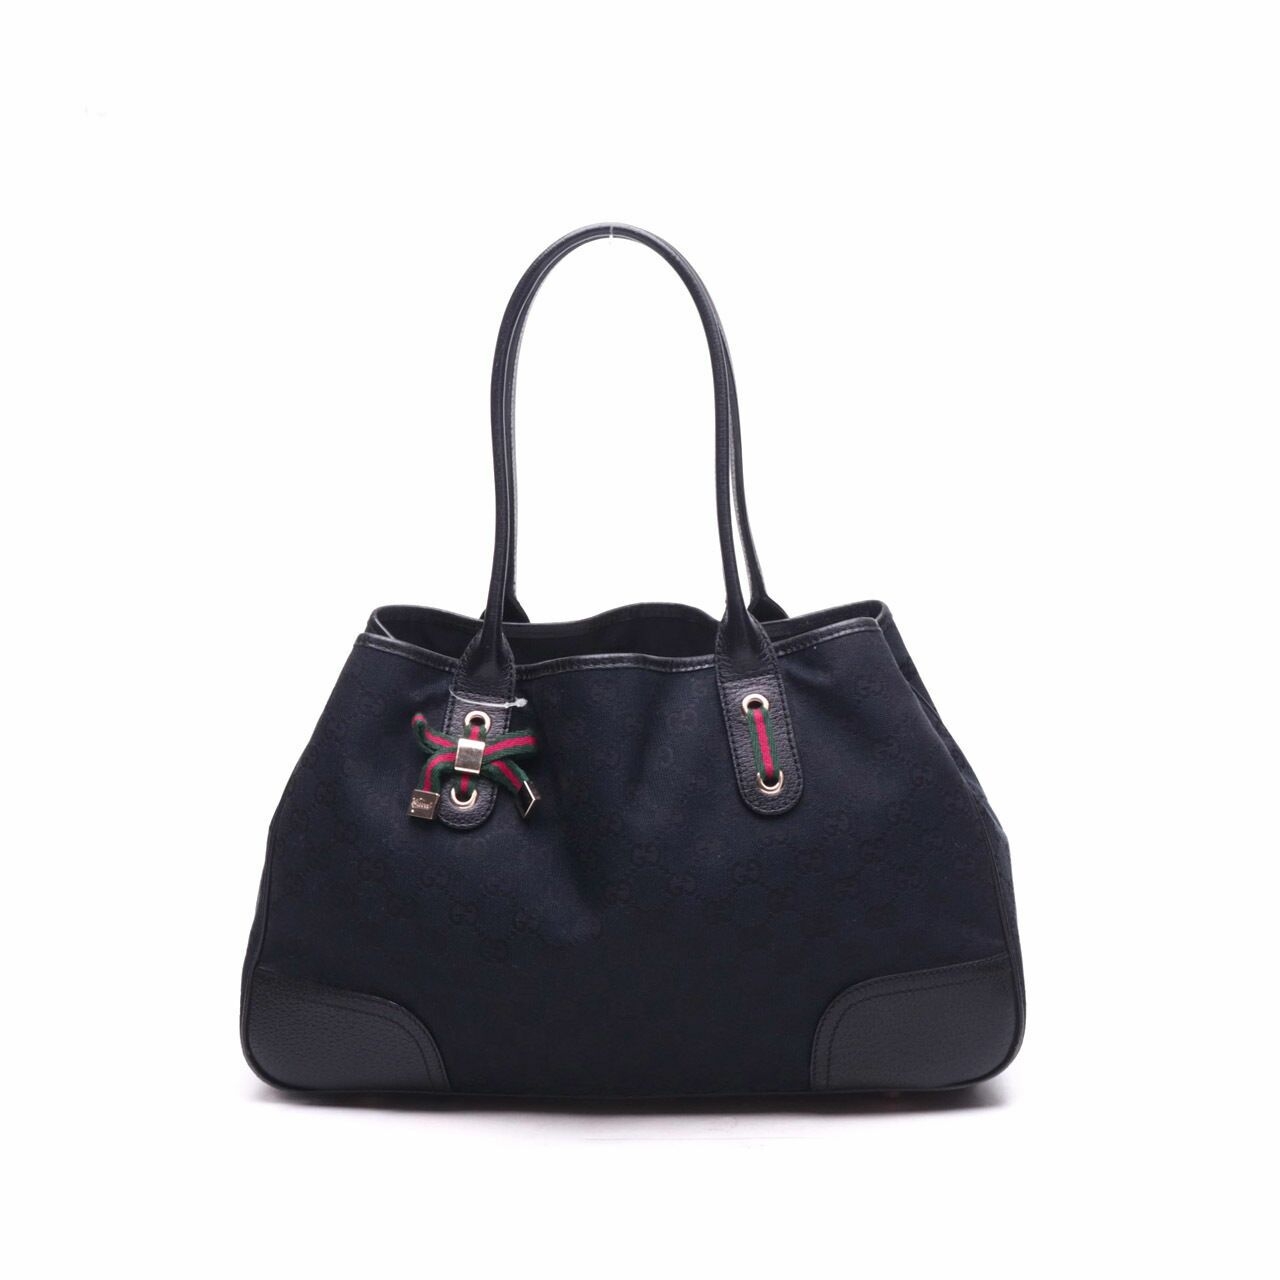 Gucci Princy Monogram Black Tote Bag